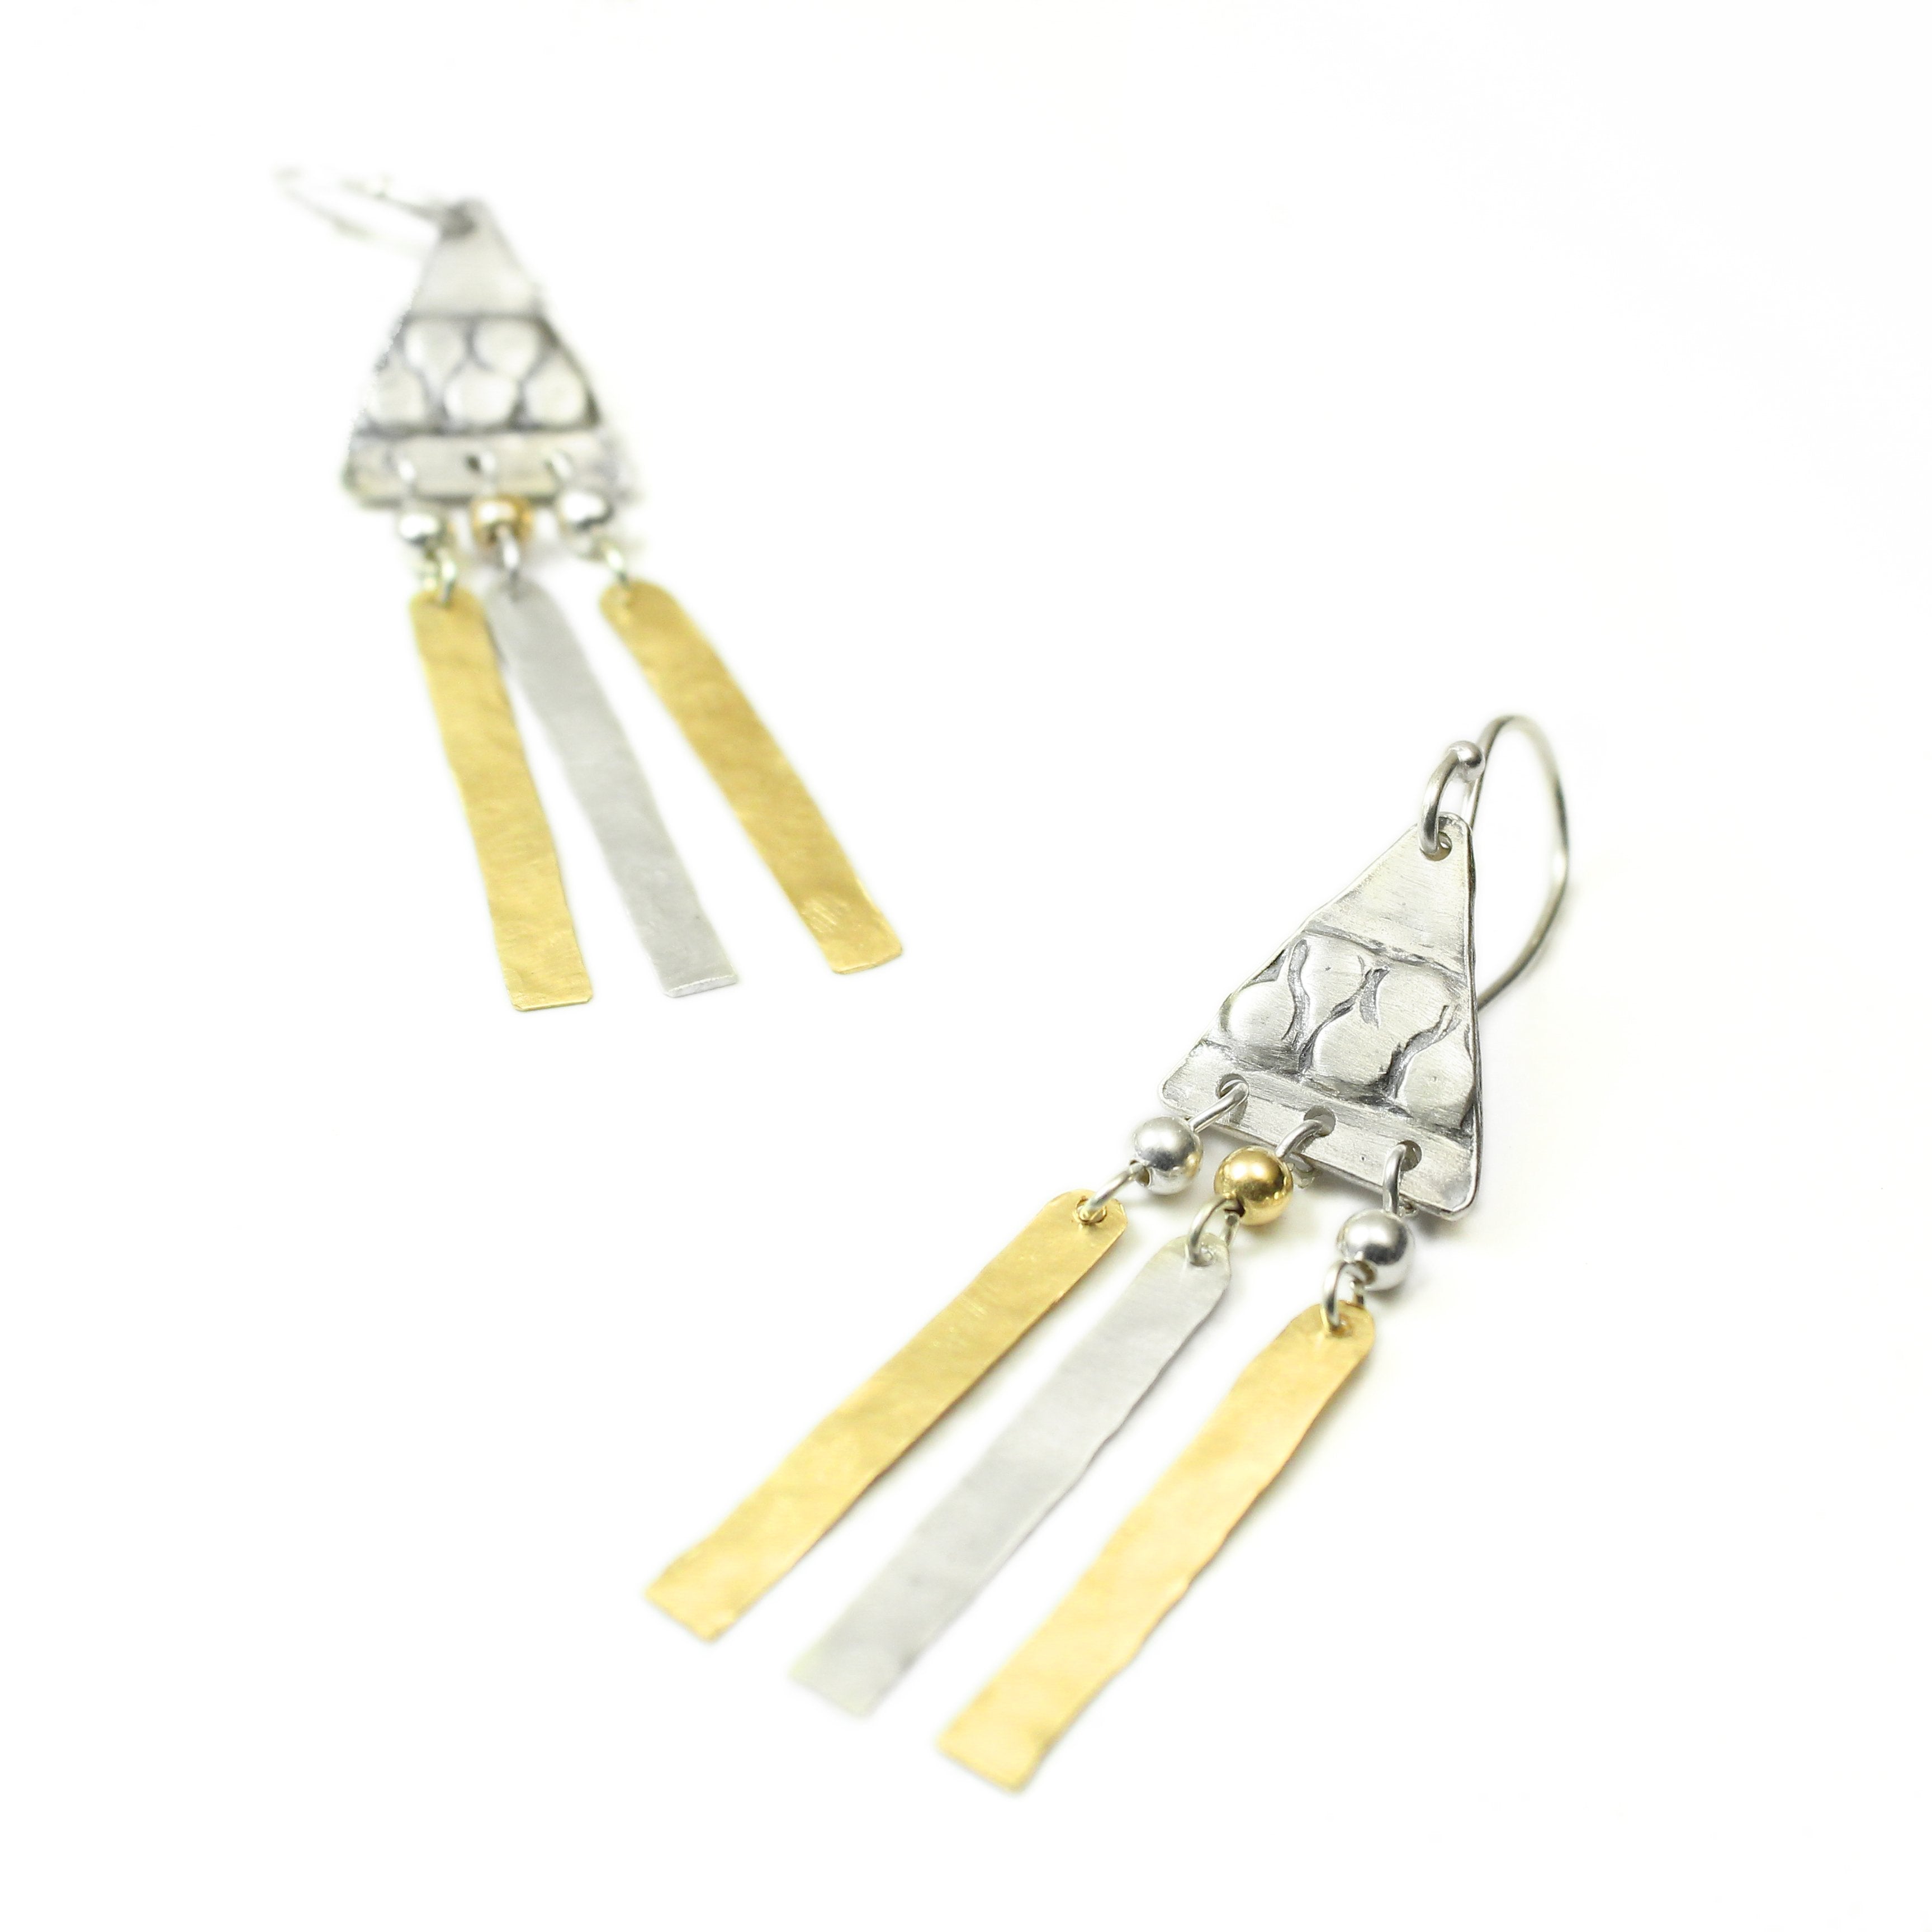 Silver & Gold filled Triangular Medium Size Earrings - Shulamit Kanter